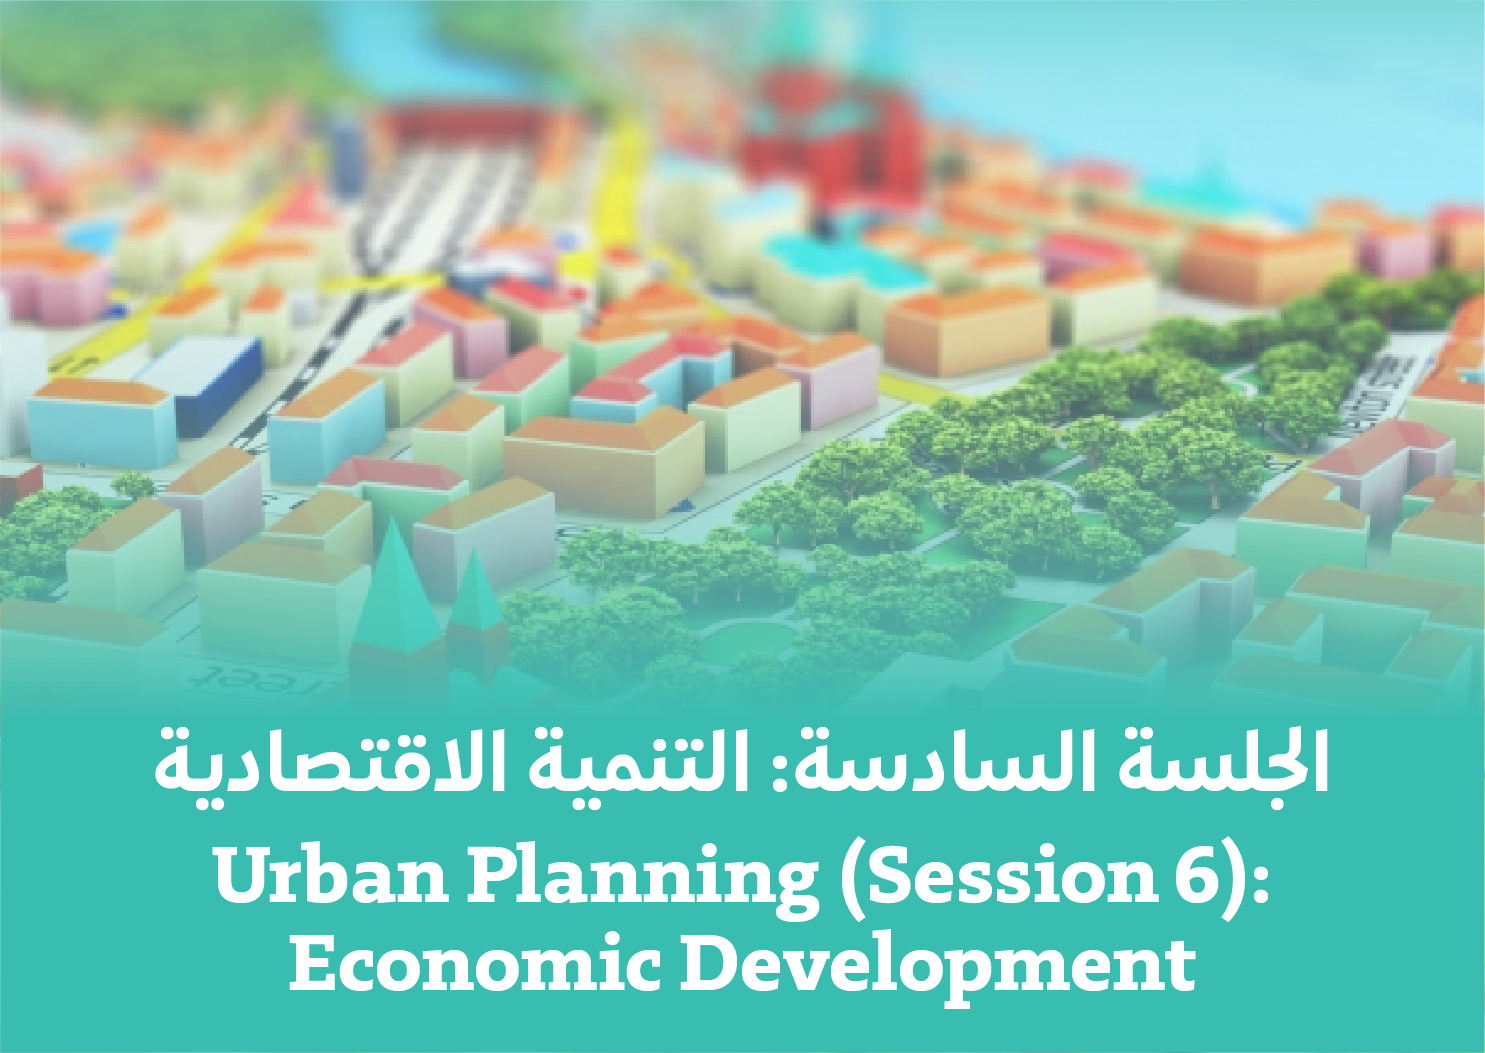 Session 6: Economic Development